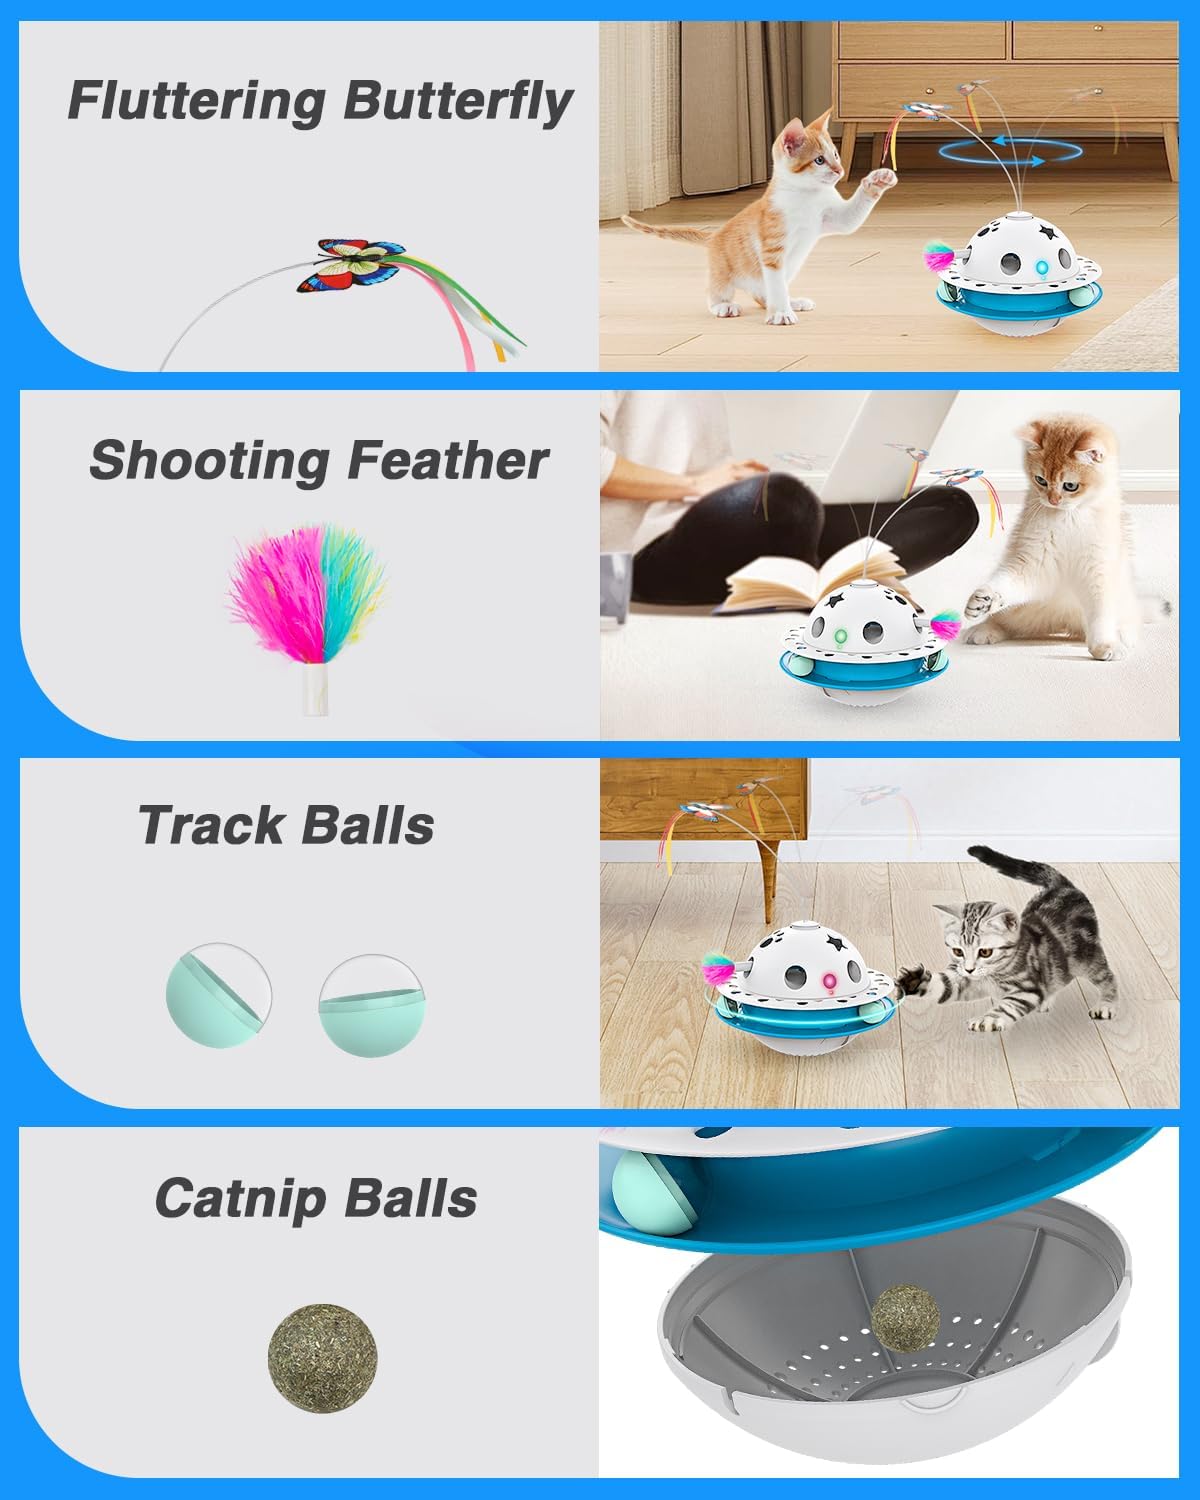 Juguetes inteligentes 3 en 1 para gatos, juguete interactivo Roly Poly para